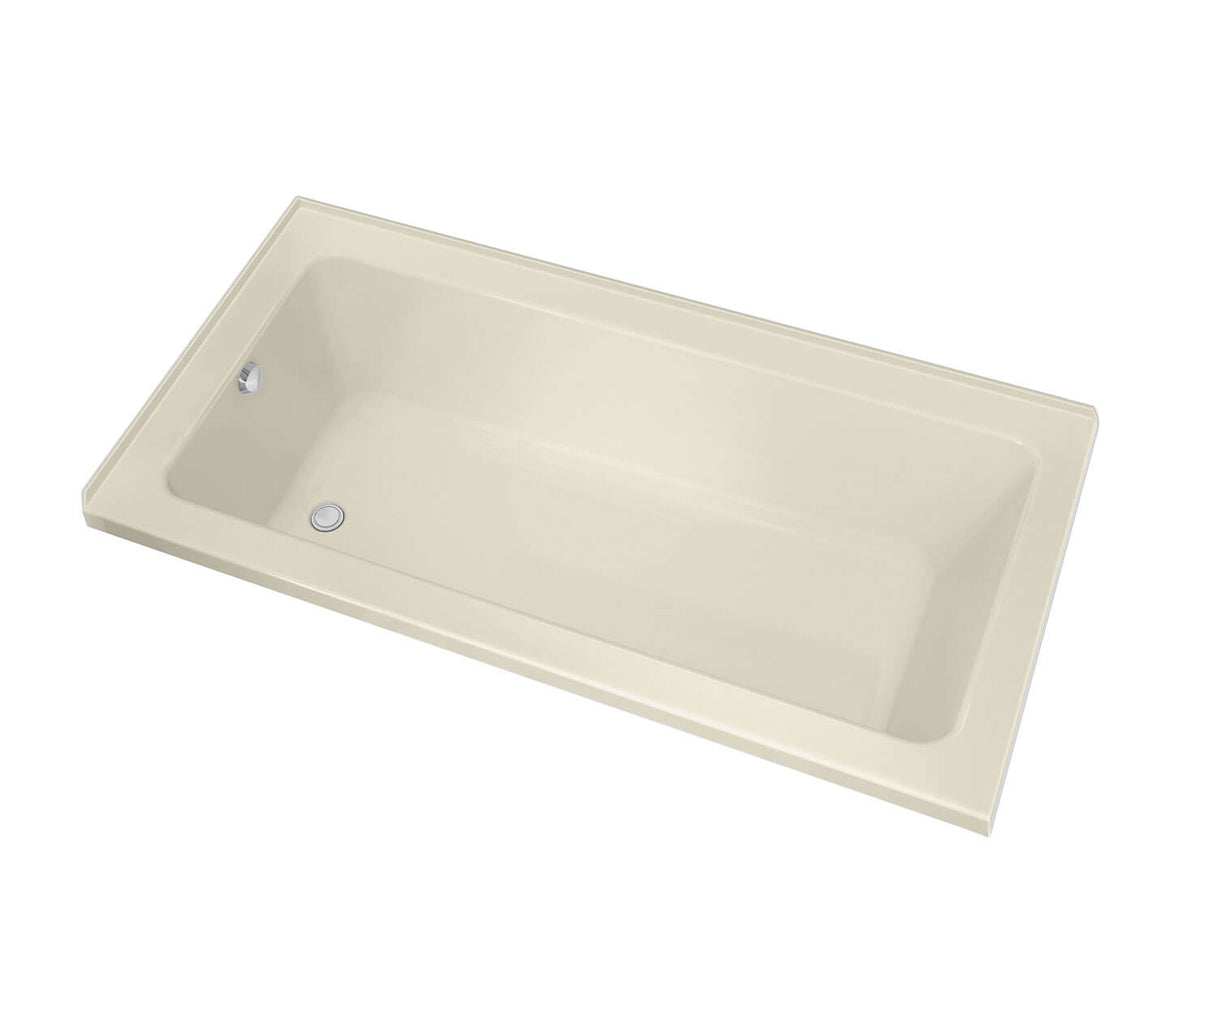 MAAX 106214-R-003-004 Pose 7242 IF Acrylic Corner Left Right-Hand Drain Whirlpool Bathtub in Bone